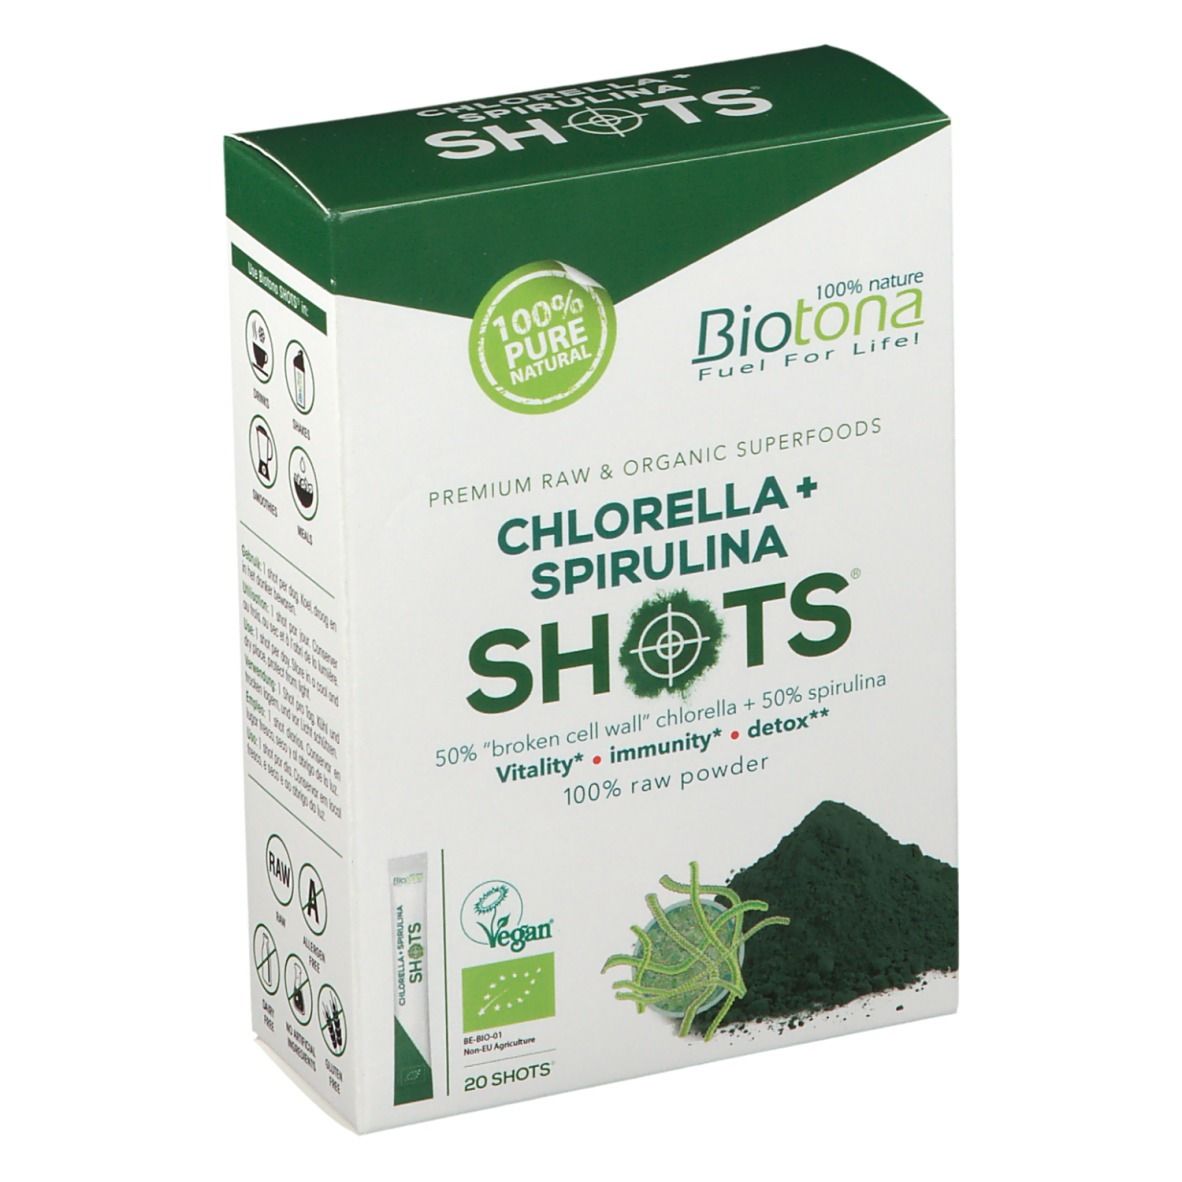 Biotona Chlorella + Spirulina Shots